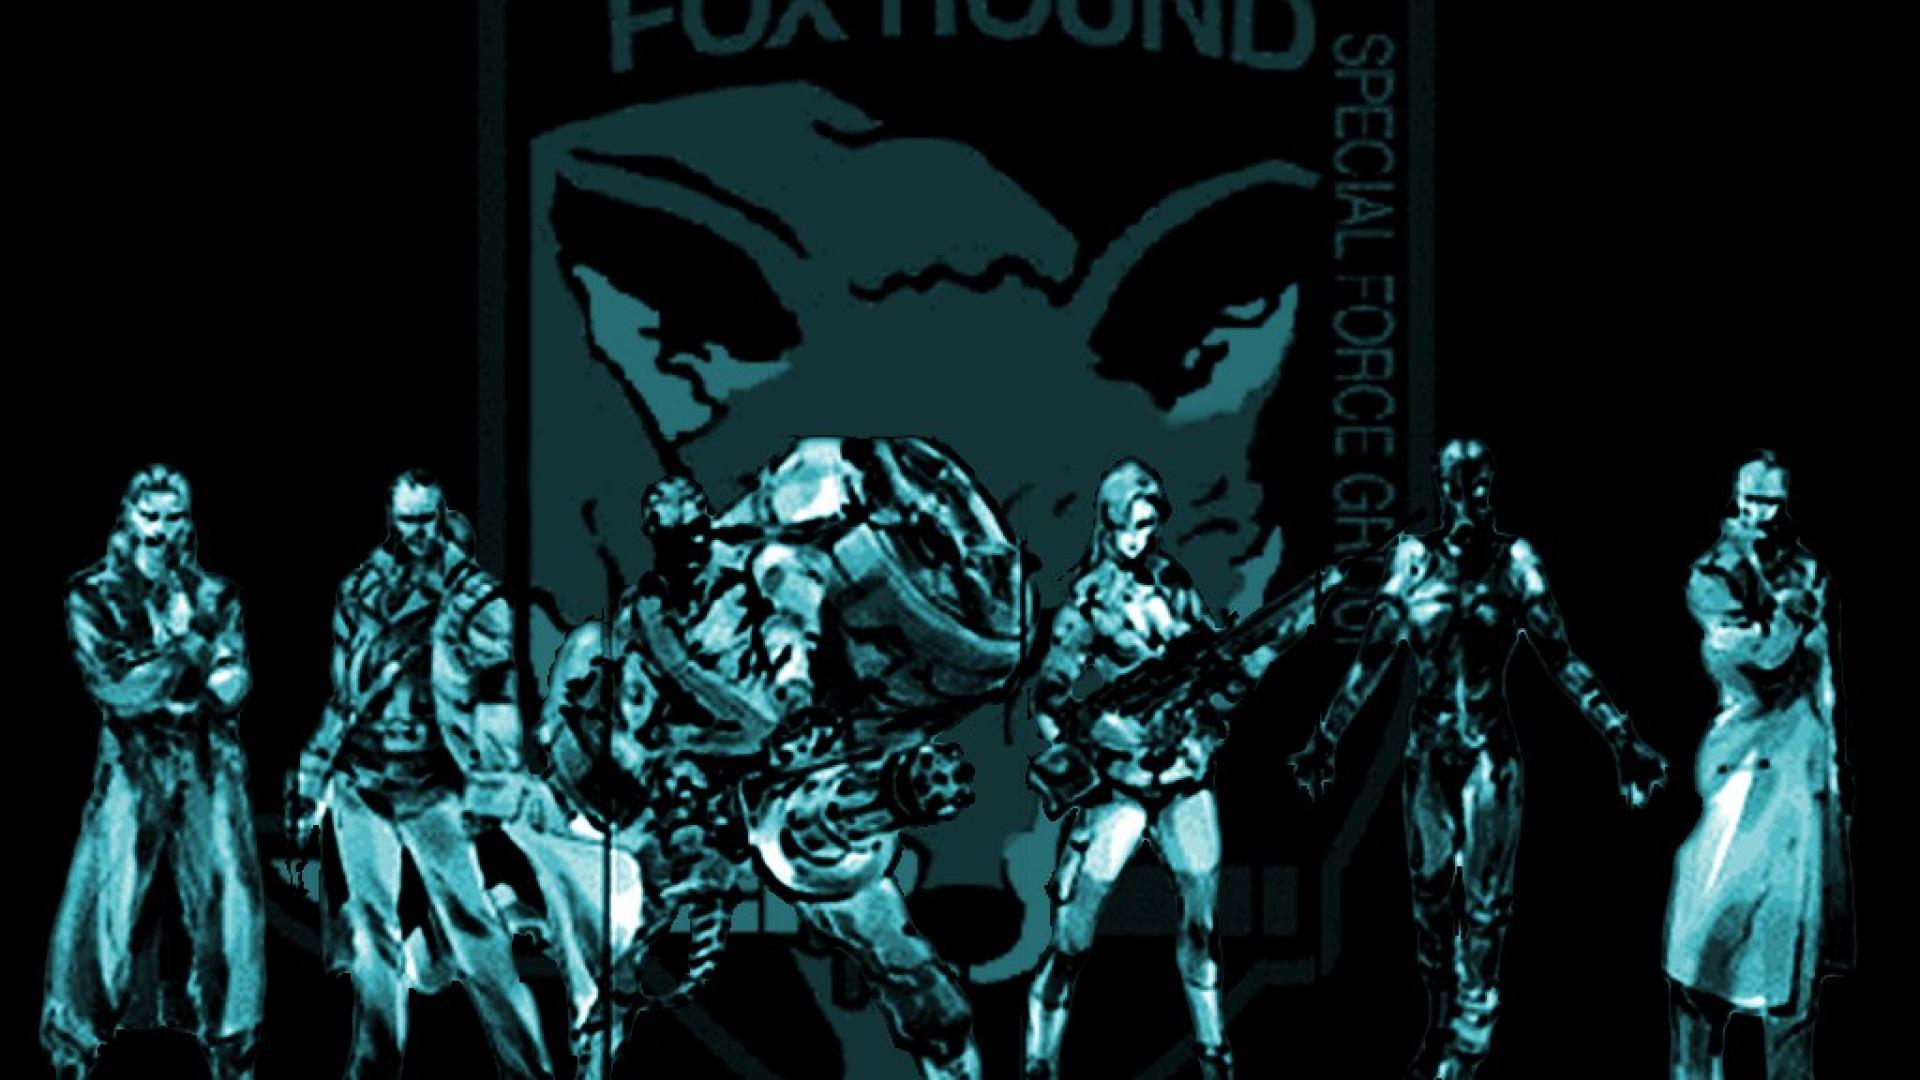 metal gear solid fox hound hd wallpaper - (#16485) - HQ Desktop ...